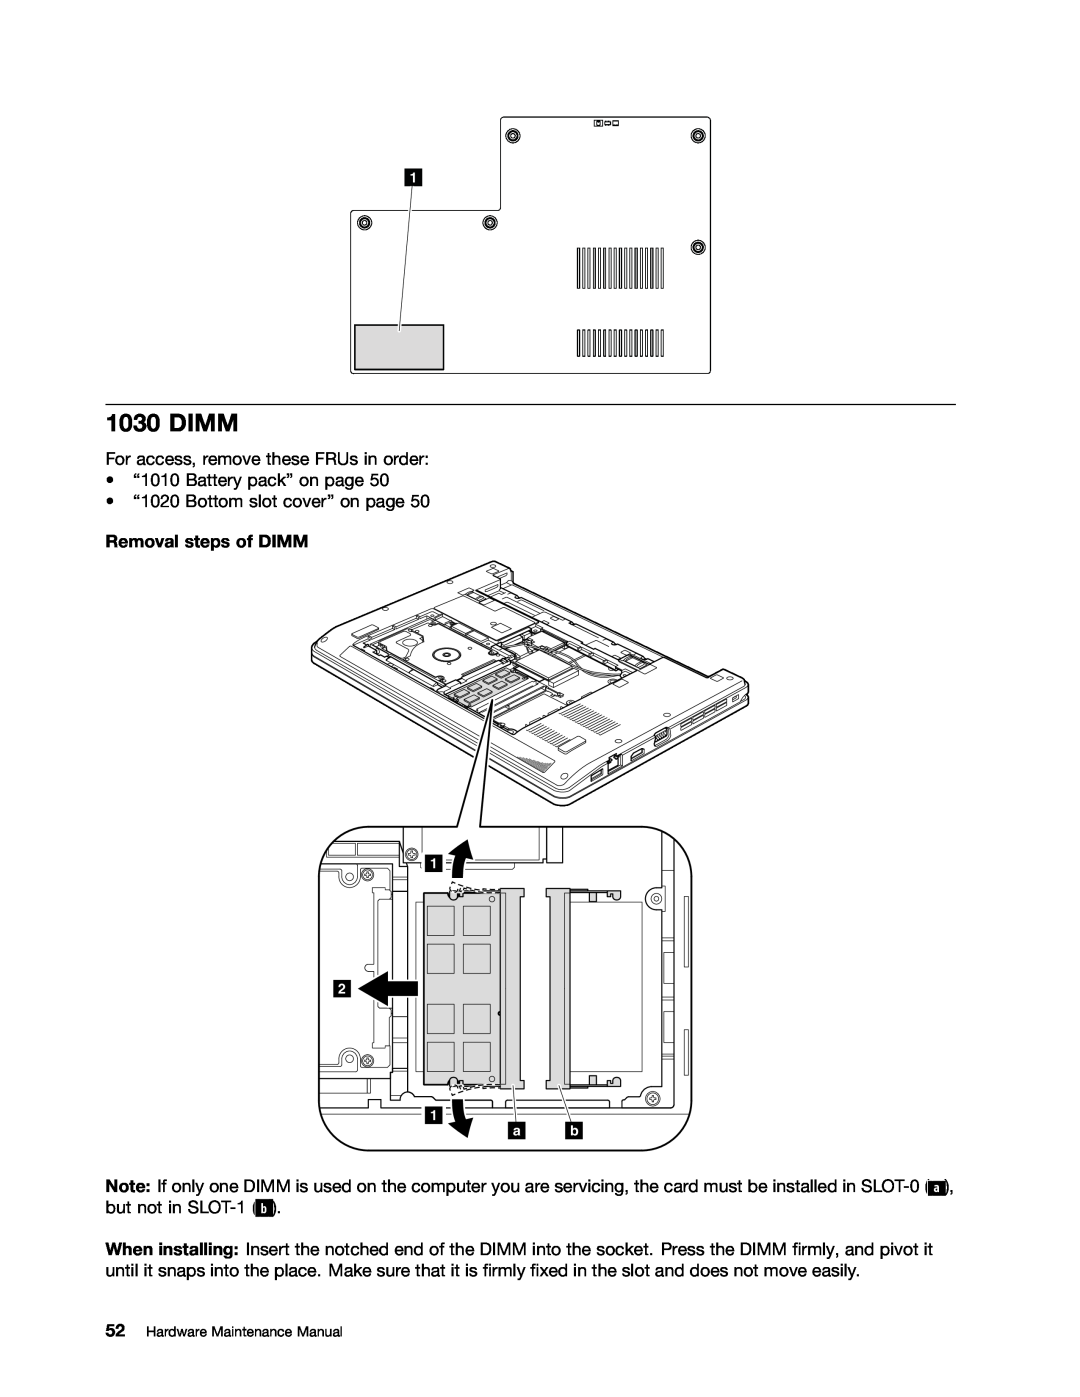 Lenovo E30, E31, EDGE 13 manual Dimm, Removal steps of DIMM 